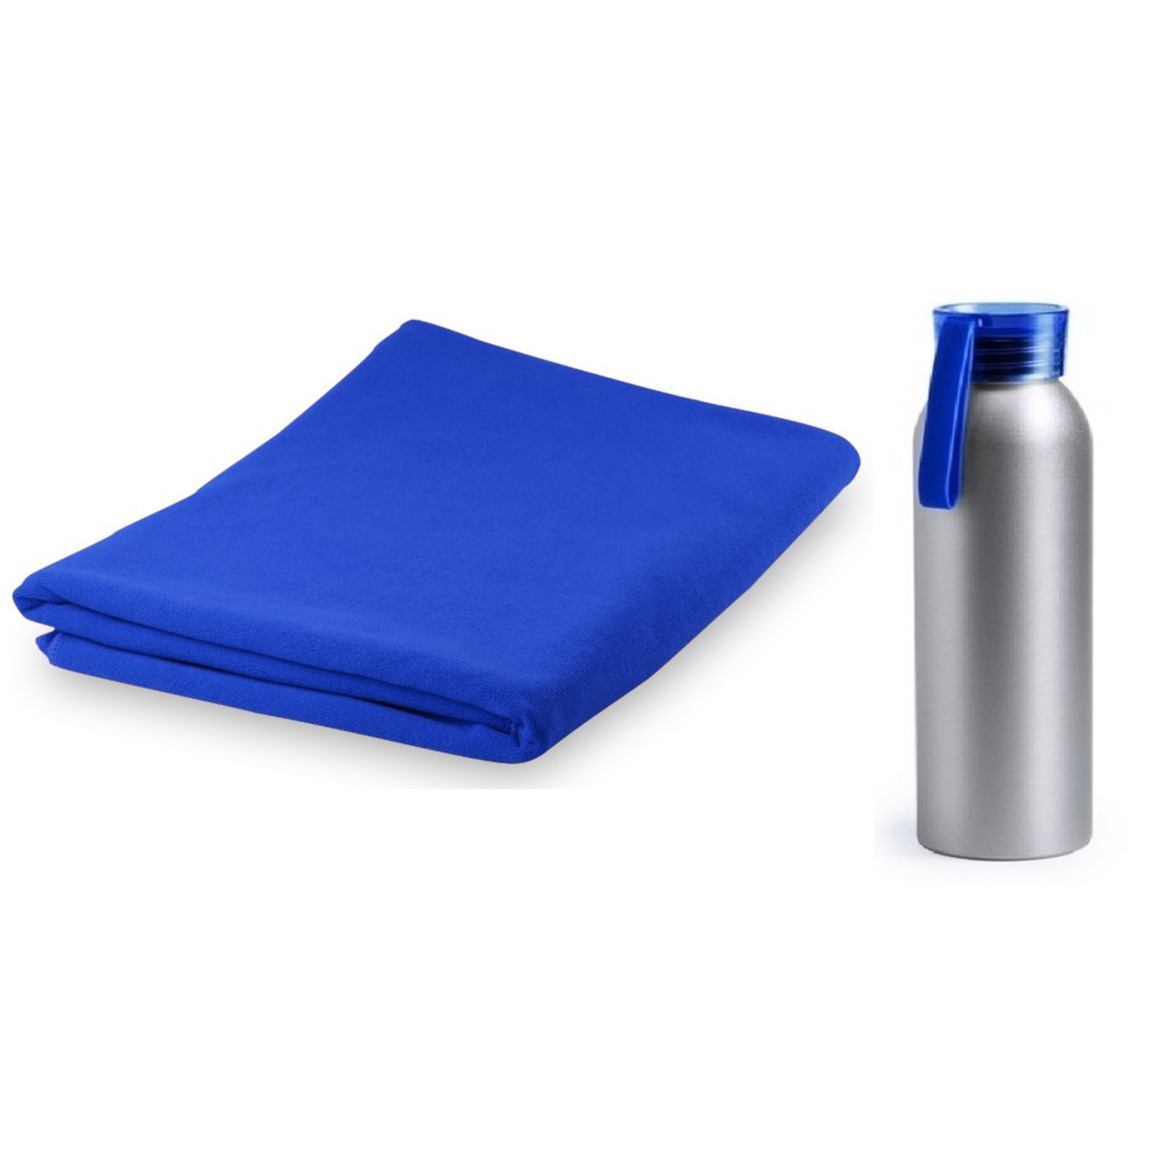 Yoga-fitness set blauwe handdoek extra absorberend en bidon-drinkfles